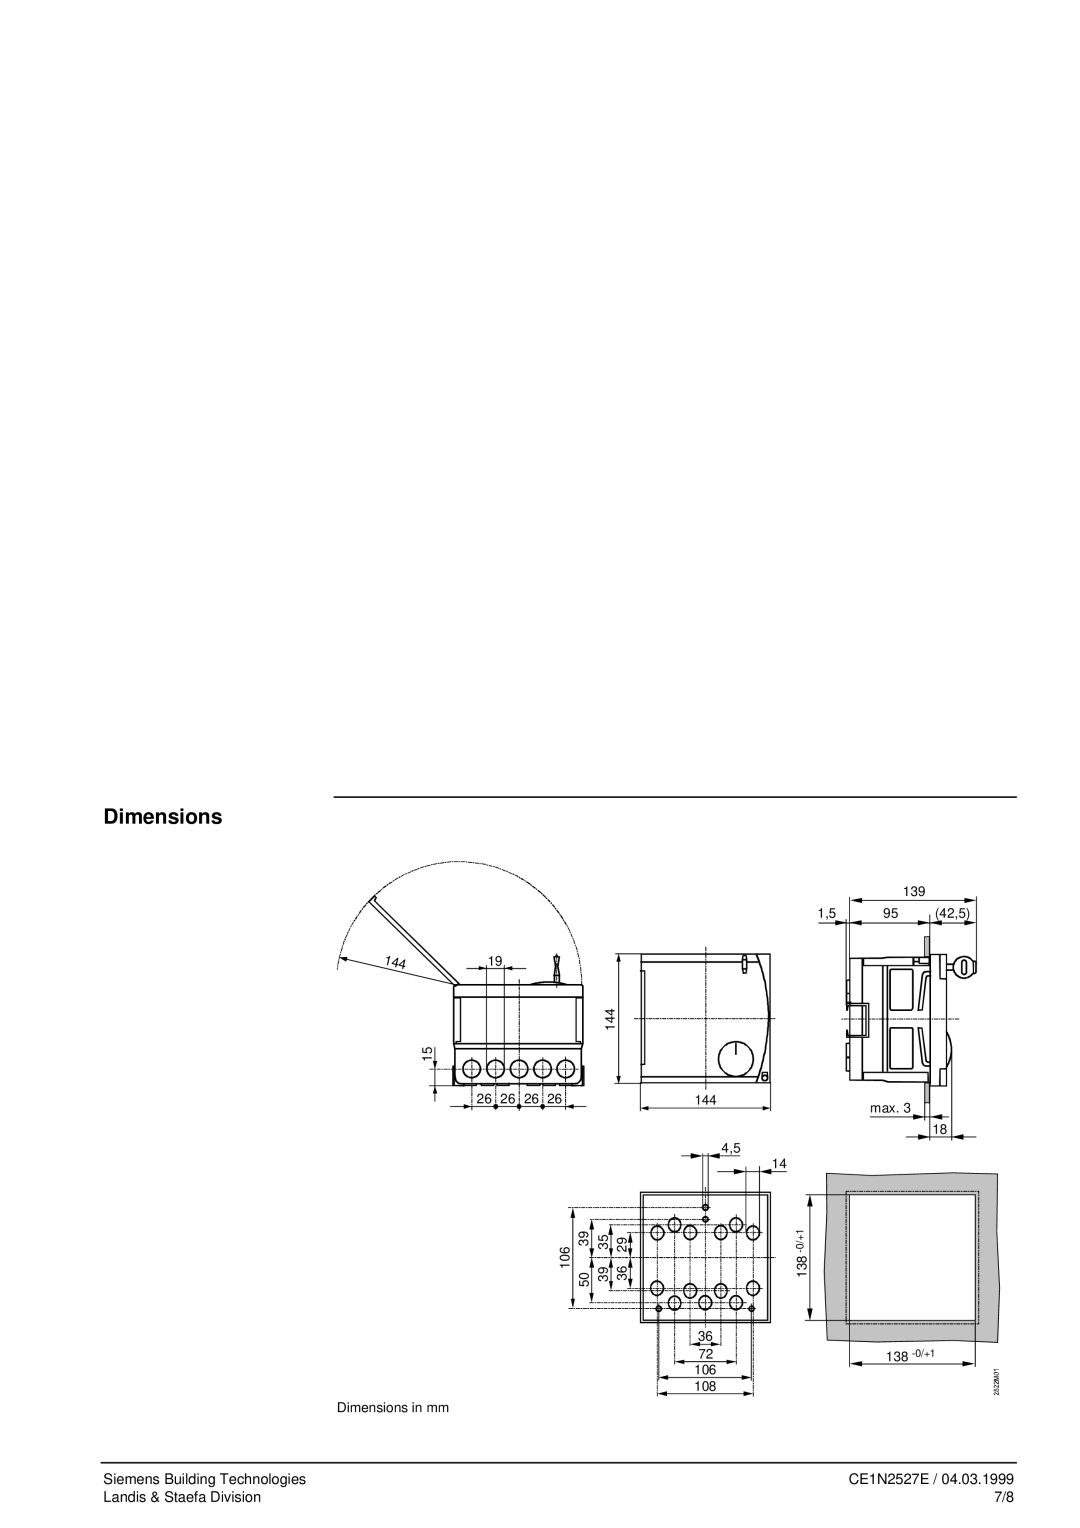 LG Electronics RVL469 manual Dimensions, Siemens Building Technologies, CE1N2527E, Landis & Staefa Division, 138 -0/+1 